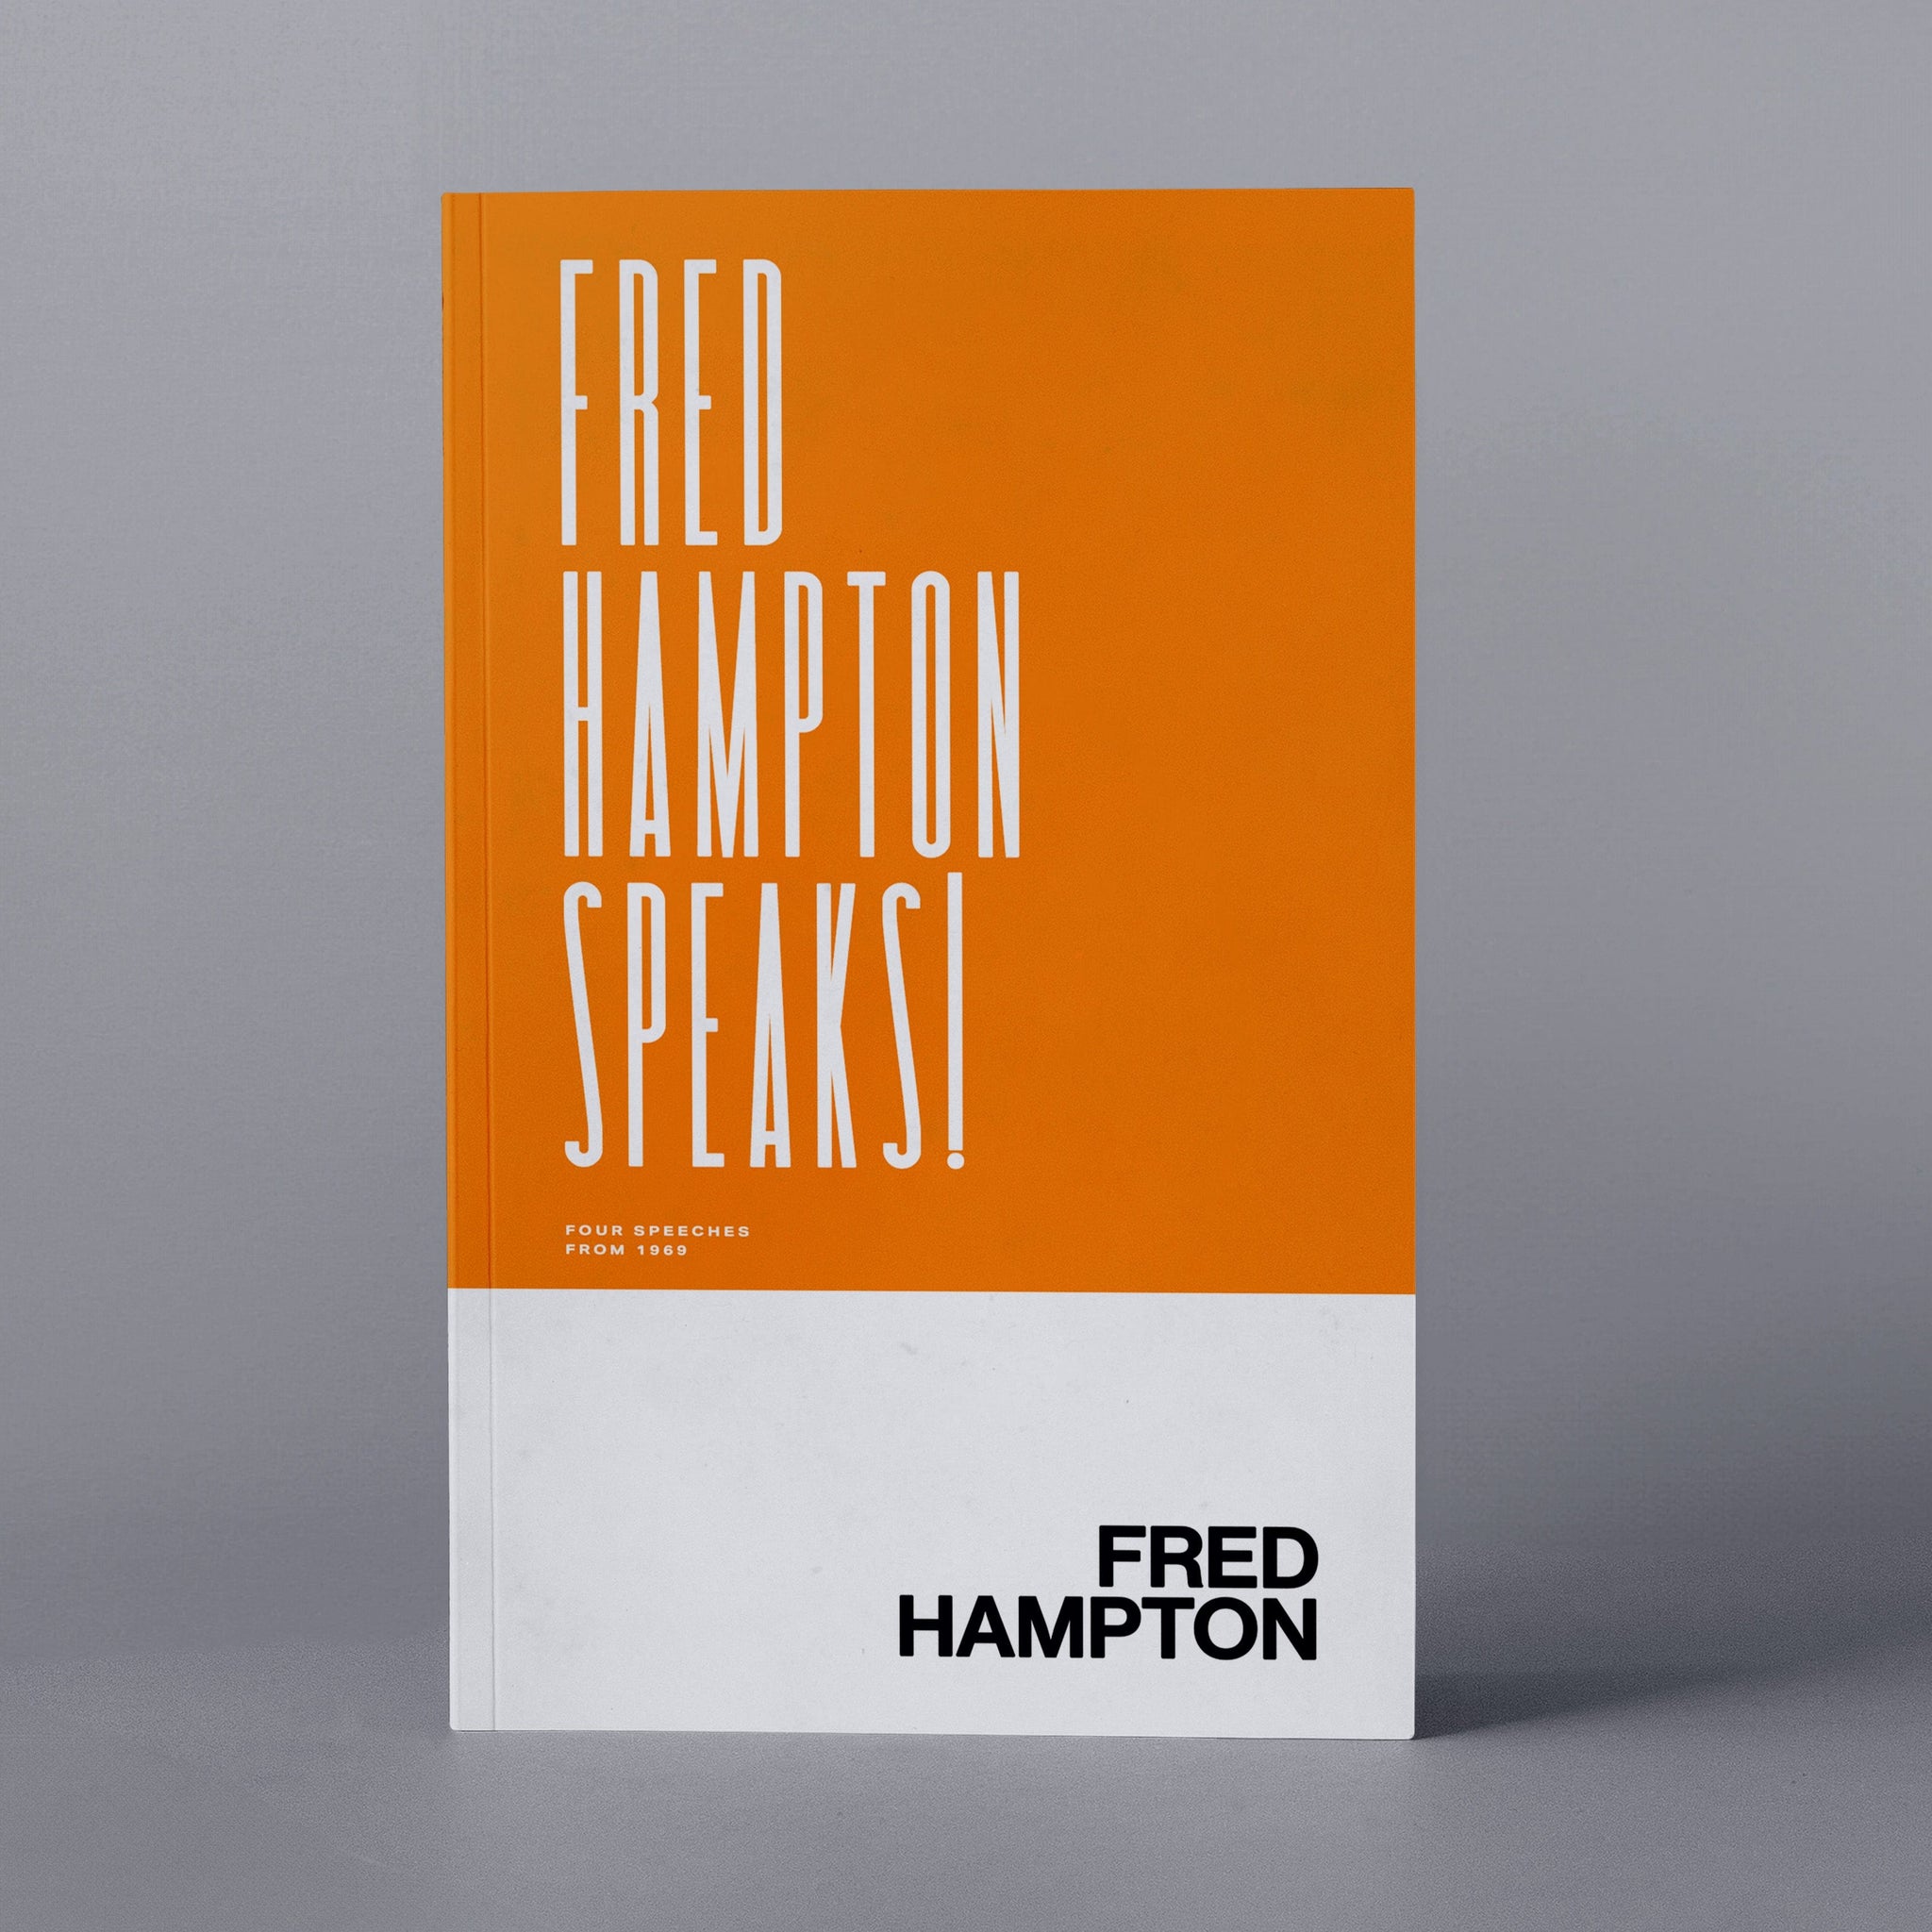 1969: Fred Hampton Speaks! (Fred Hampton)